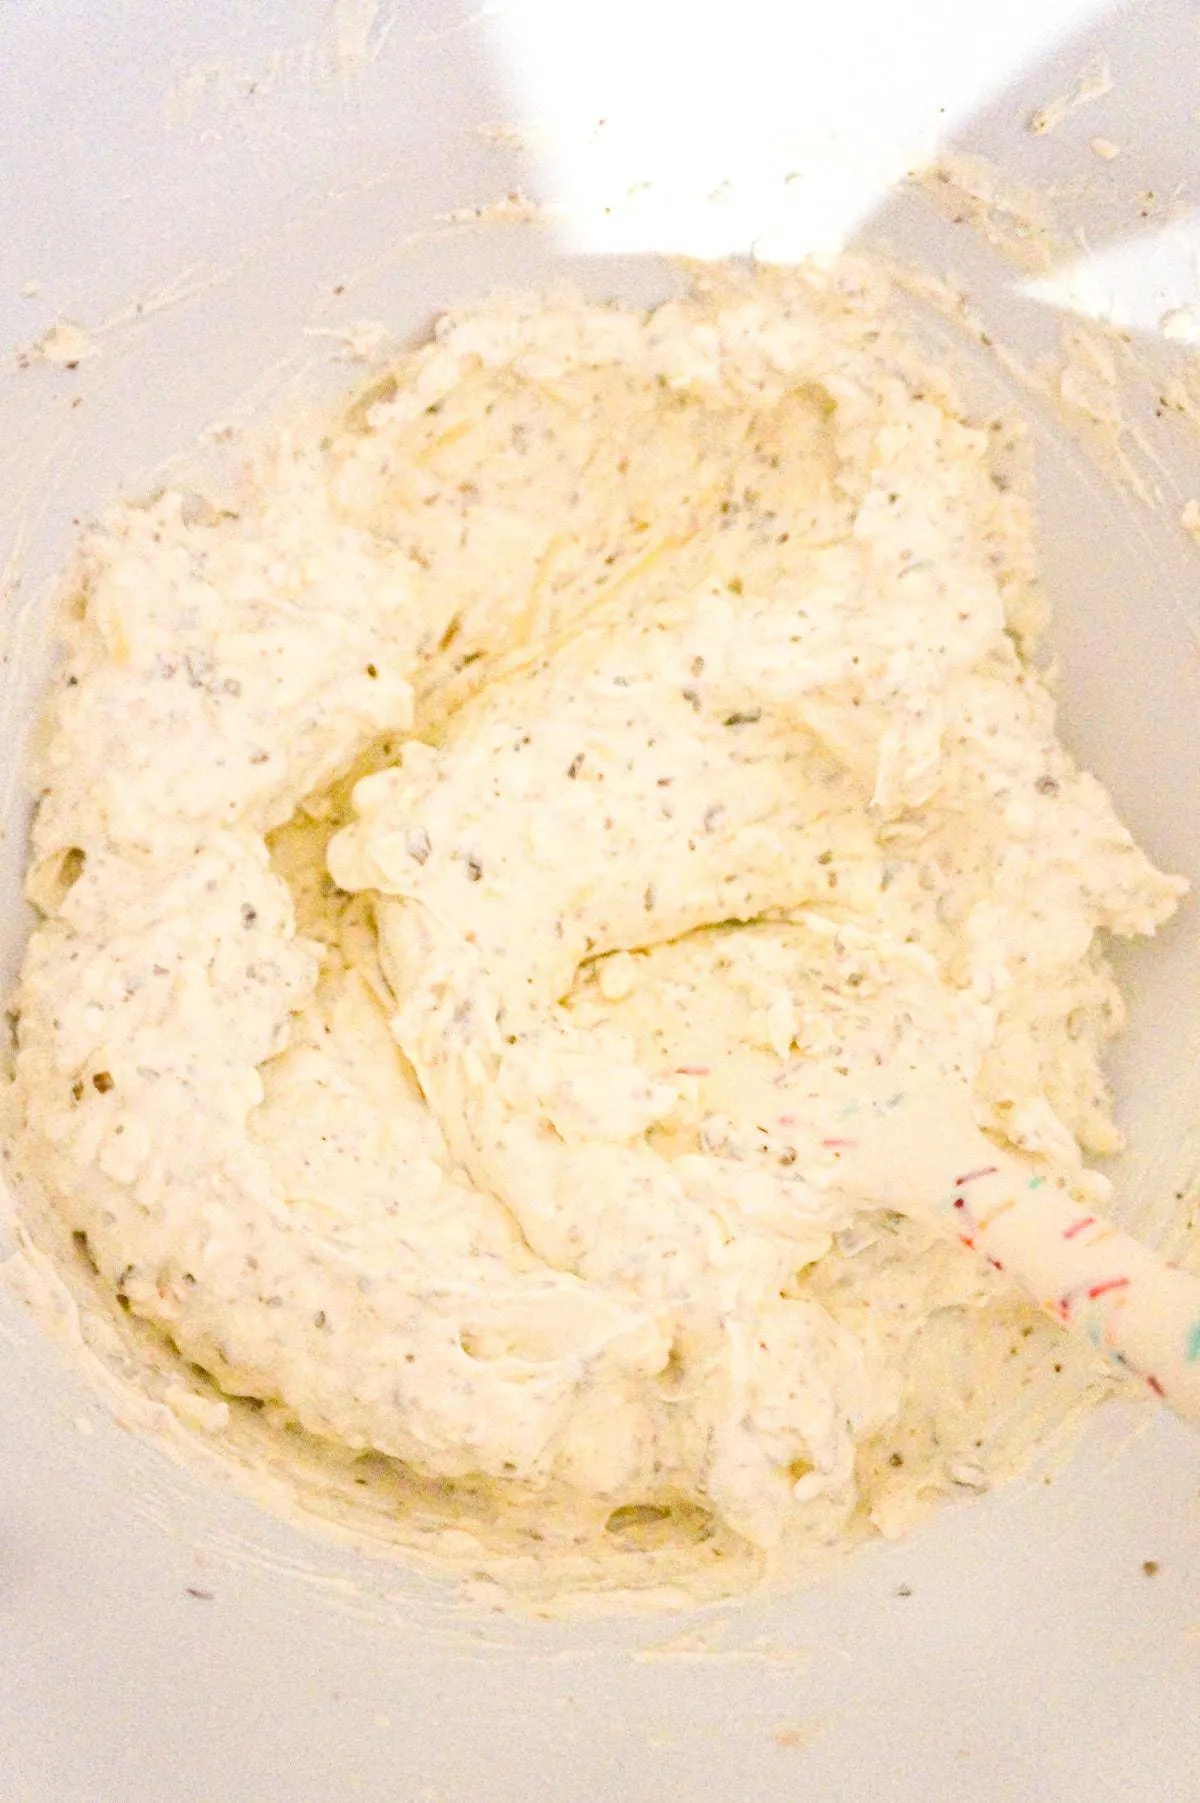 cream cheese, sour cream and basil pesto mixture in a baking dish